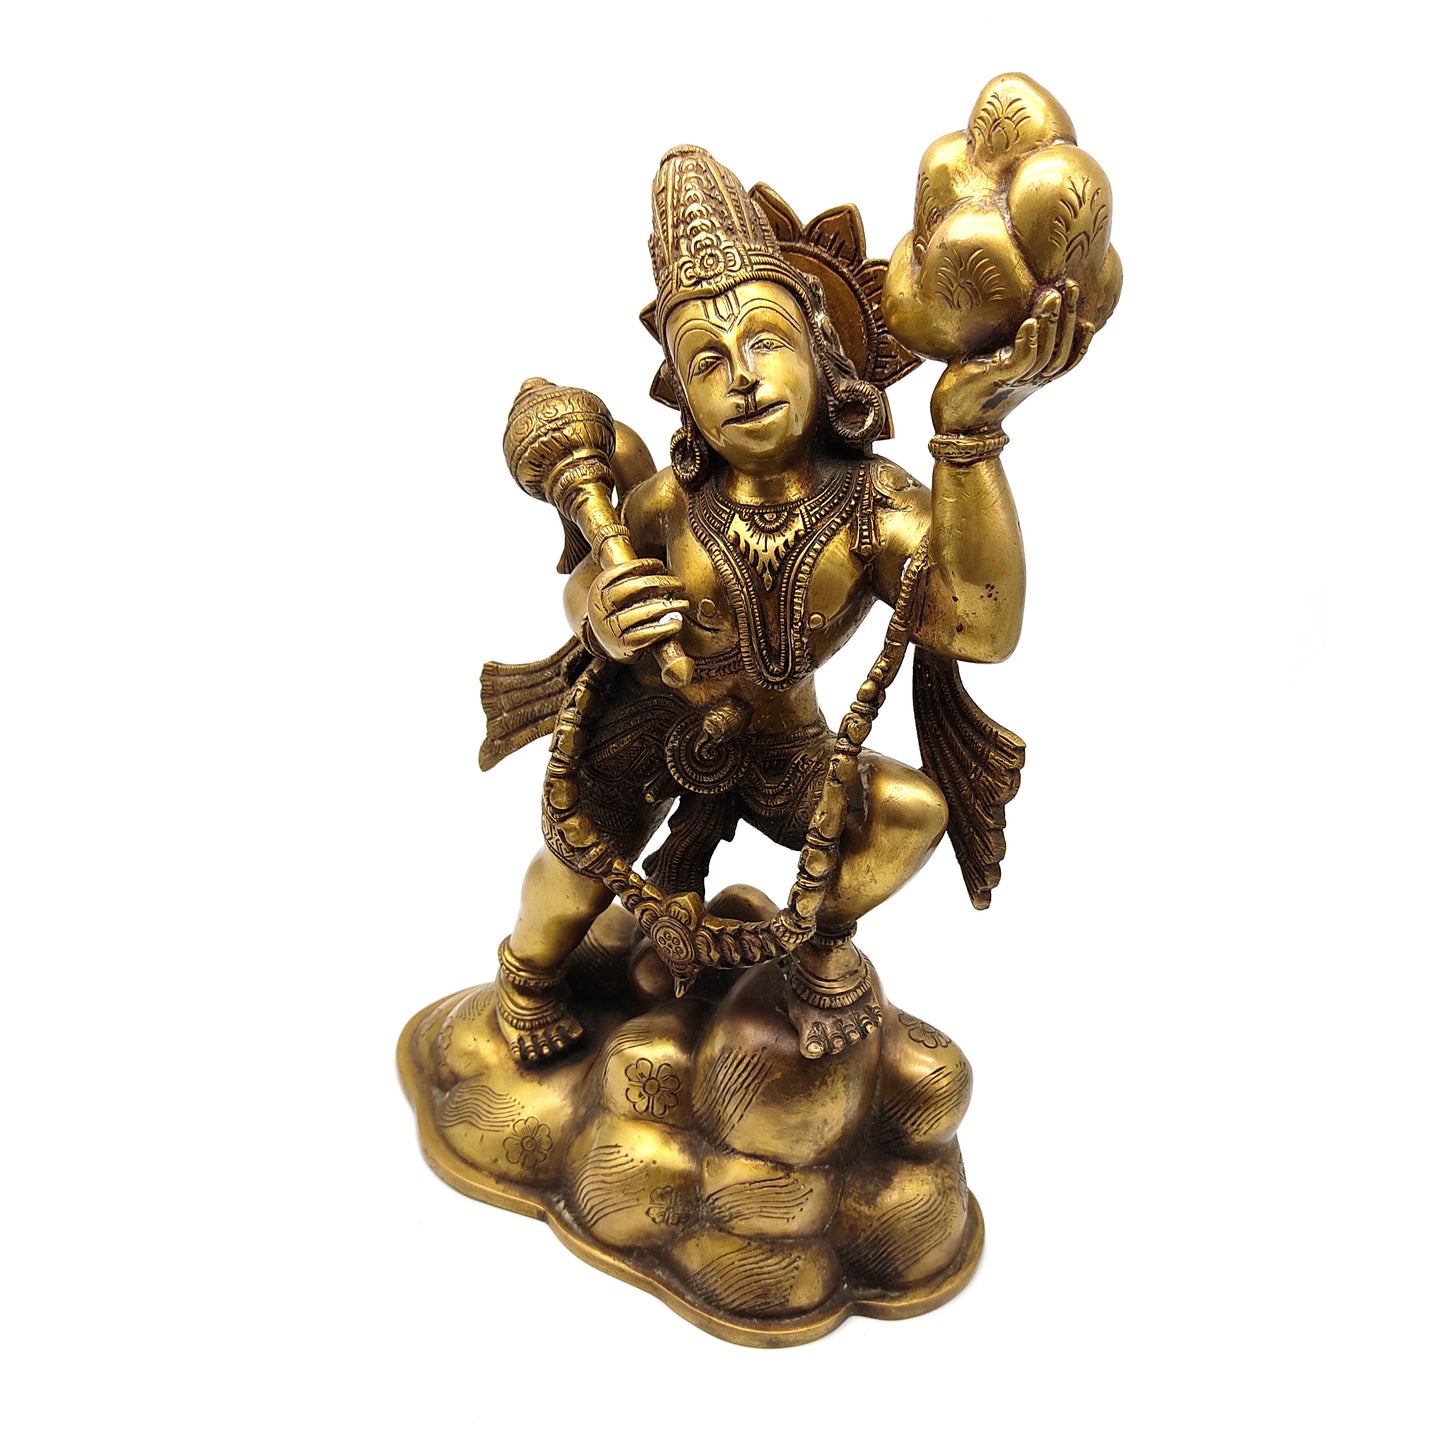 Brass India Lord Hanuman Hanumanji Monkey God Murthi Statue Handcrafted 12.5"